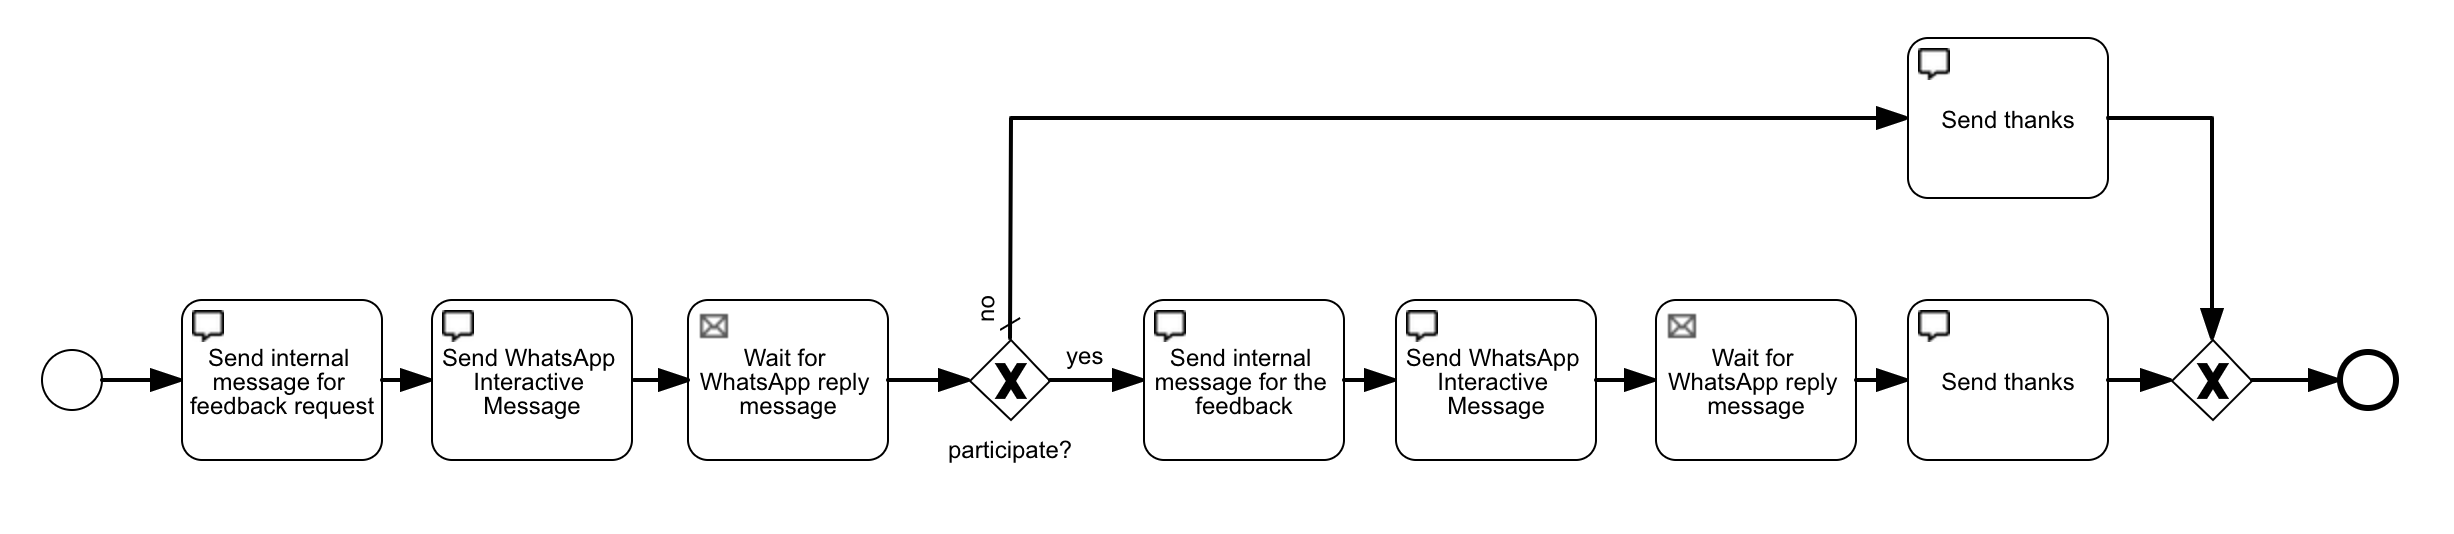 messaging-process